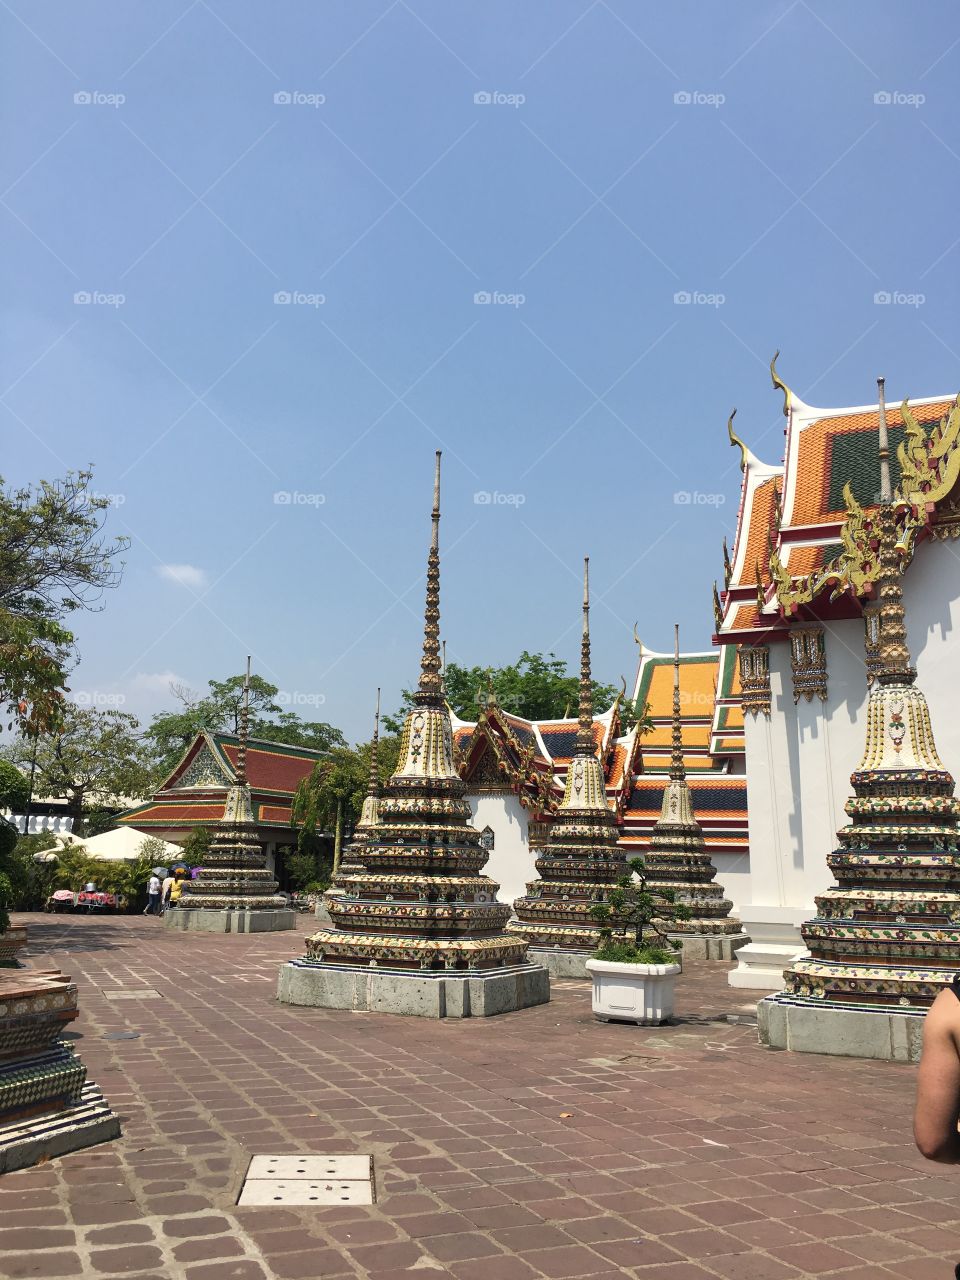 Temple Bangkok Thailand 